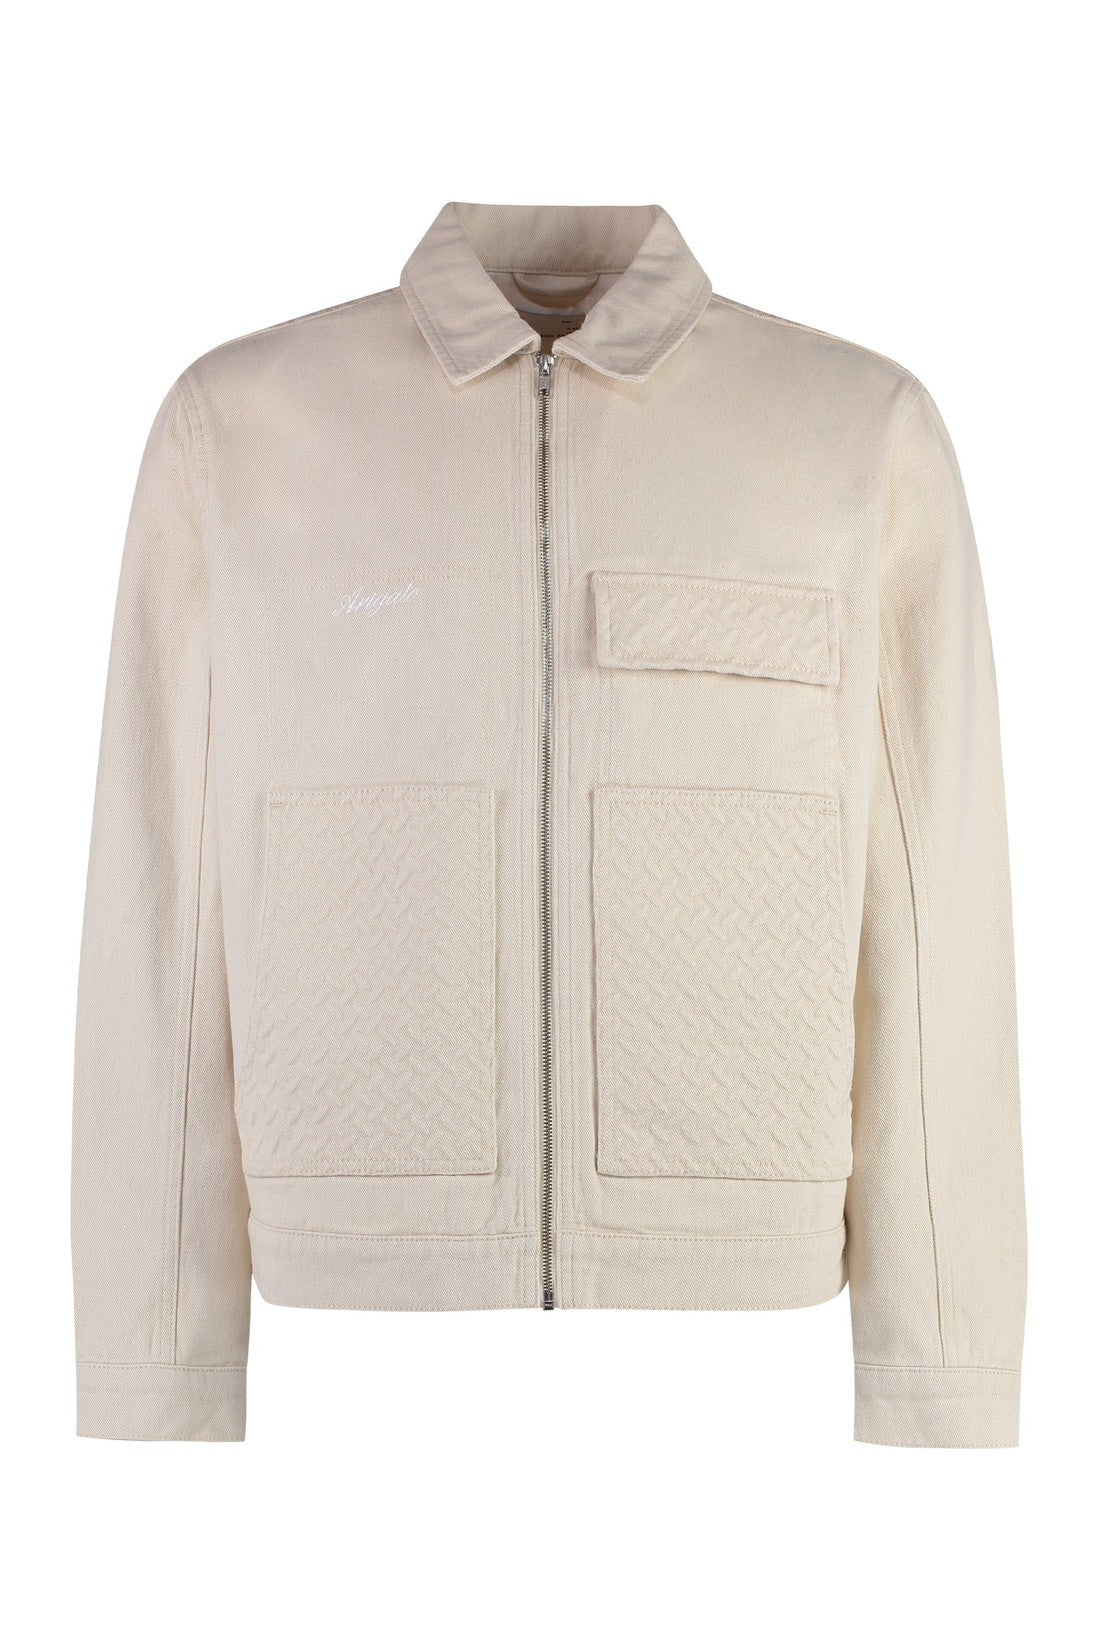 Axel Arigato-OUTLET-SALE-Grate zippered cotton jacket-ARCHIVIST